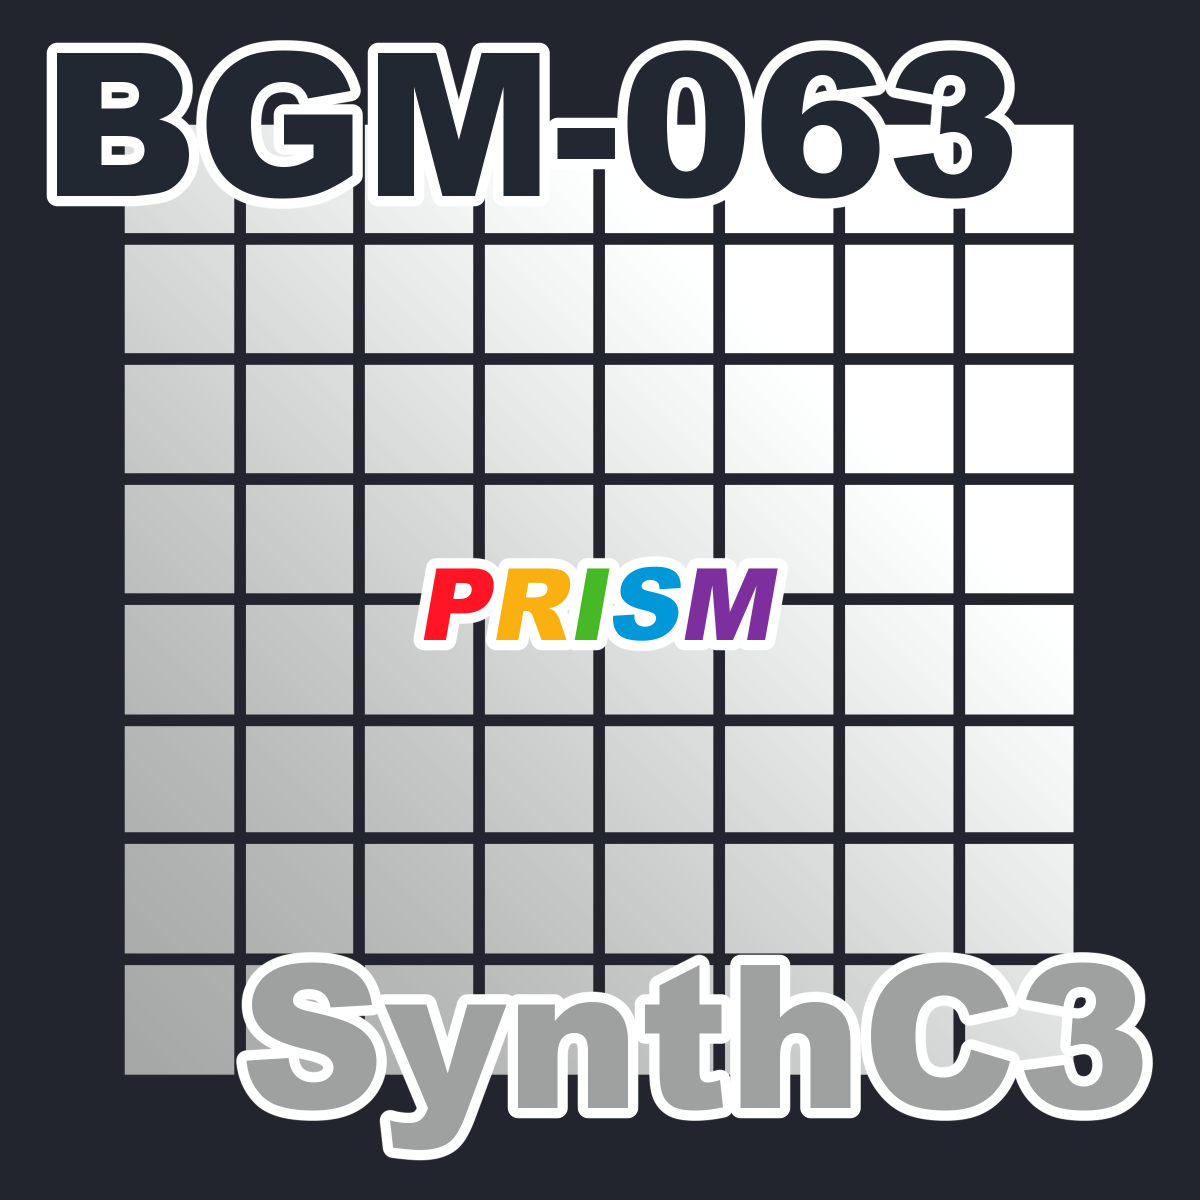 BGM-063 SynthC3 -Short ver.-